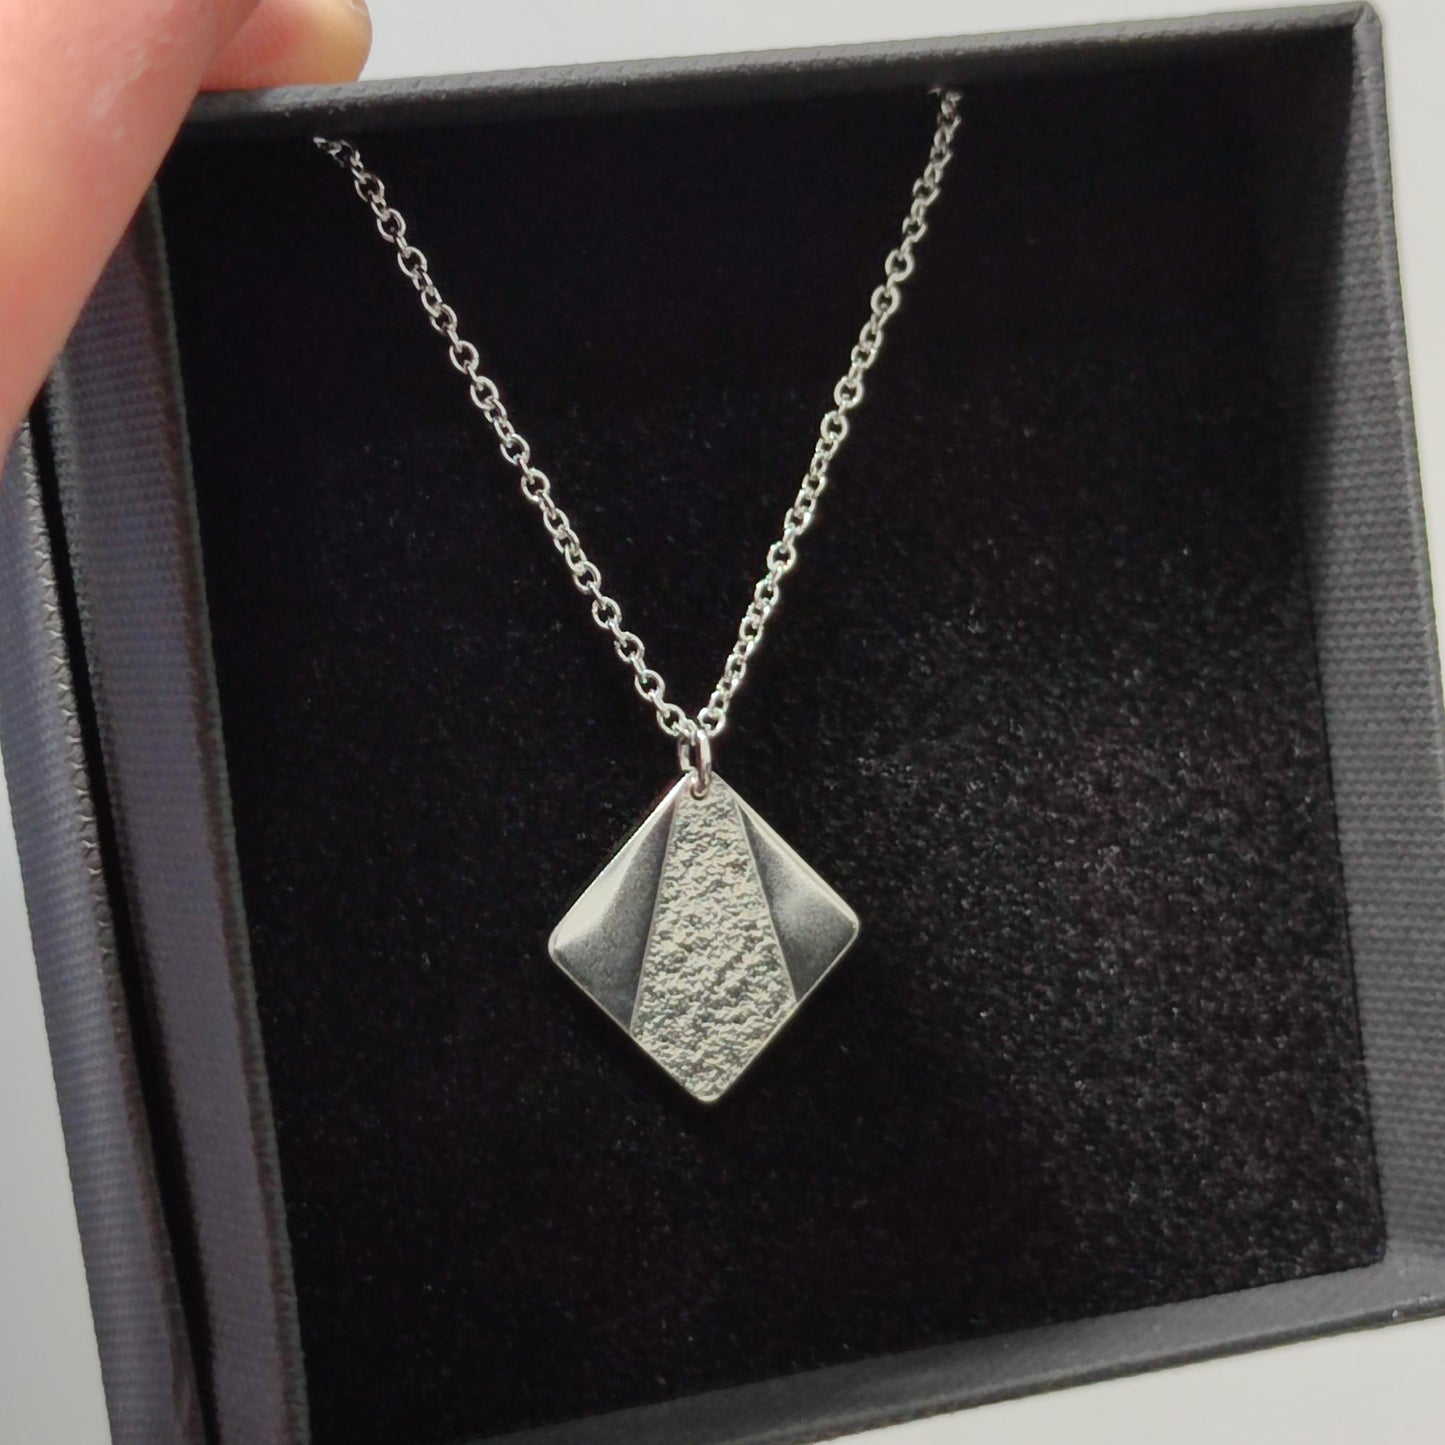 handmade square pendant necklace in black gift box